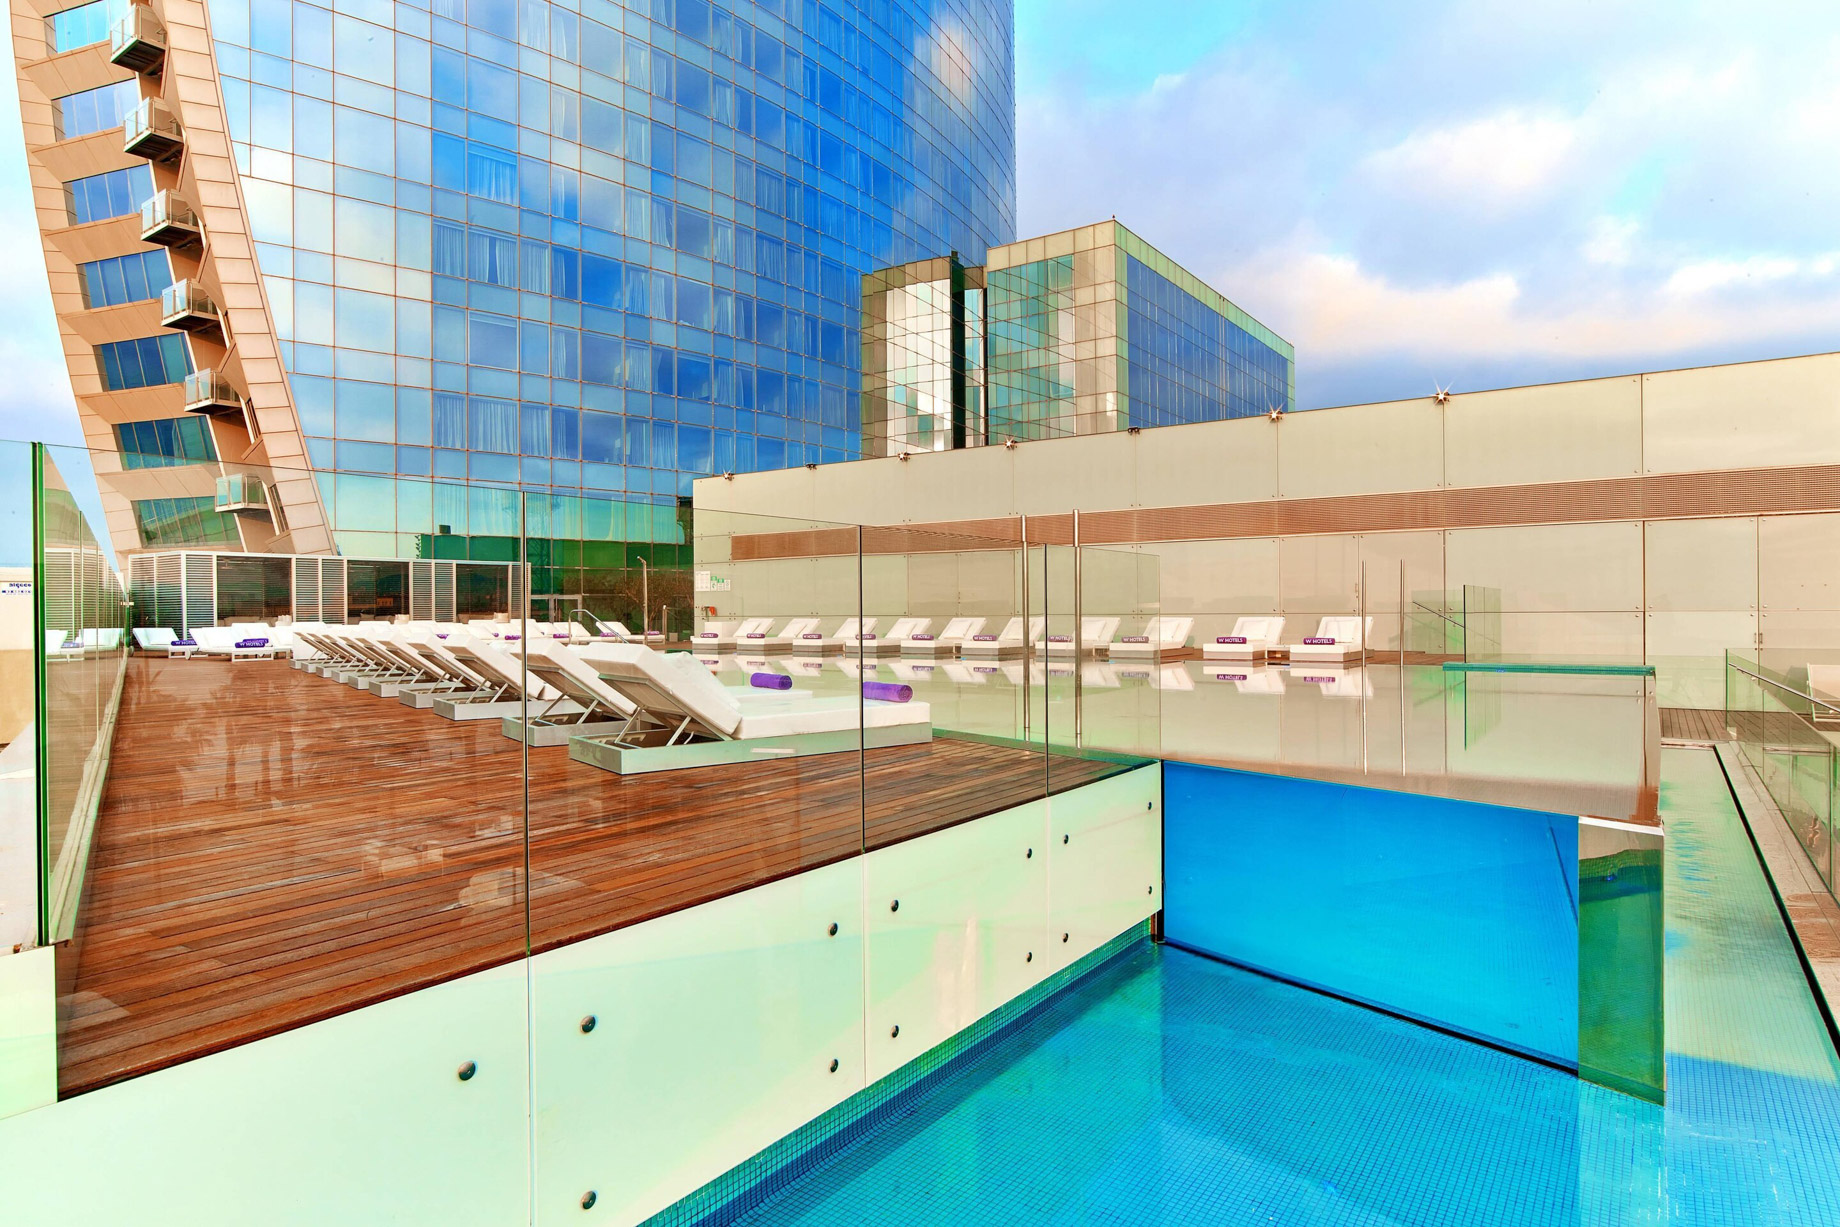 W Barcelona Hotel – Barcelona, Spain – Sun Deck Infinity Pool and Terrace